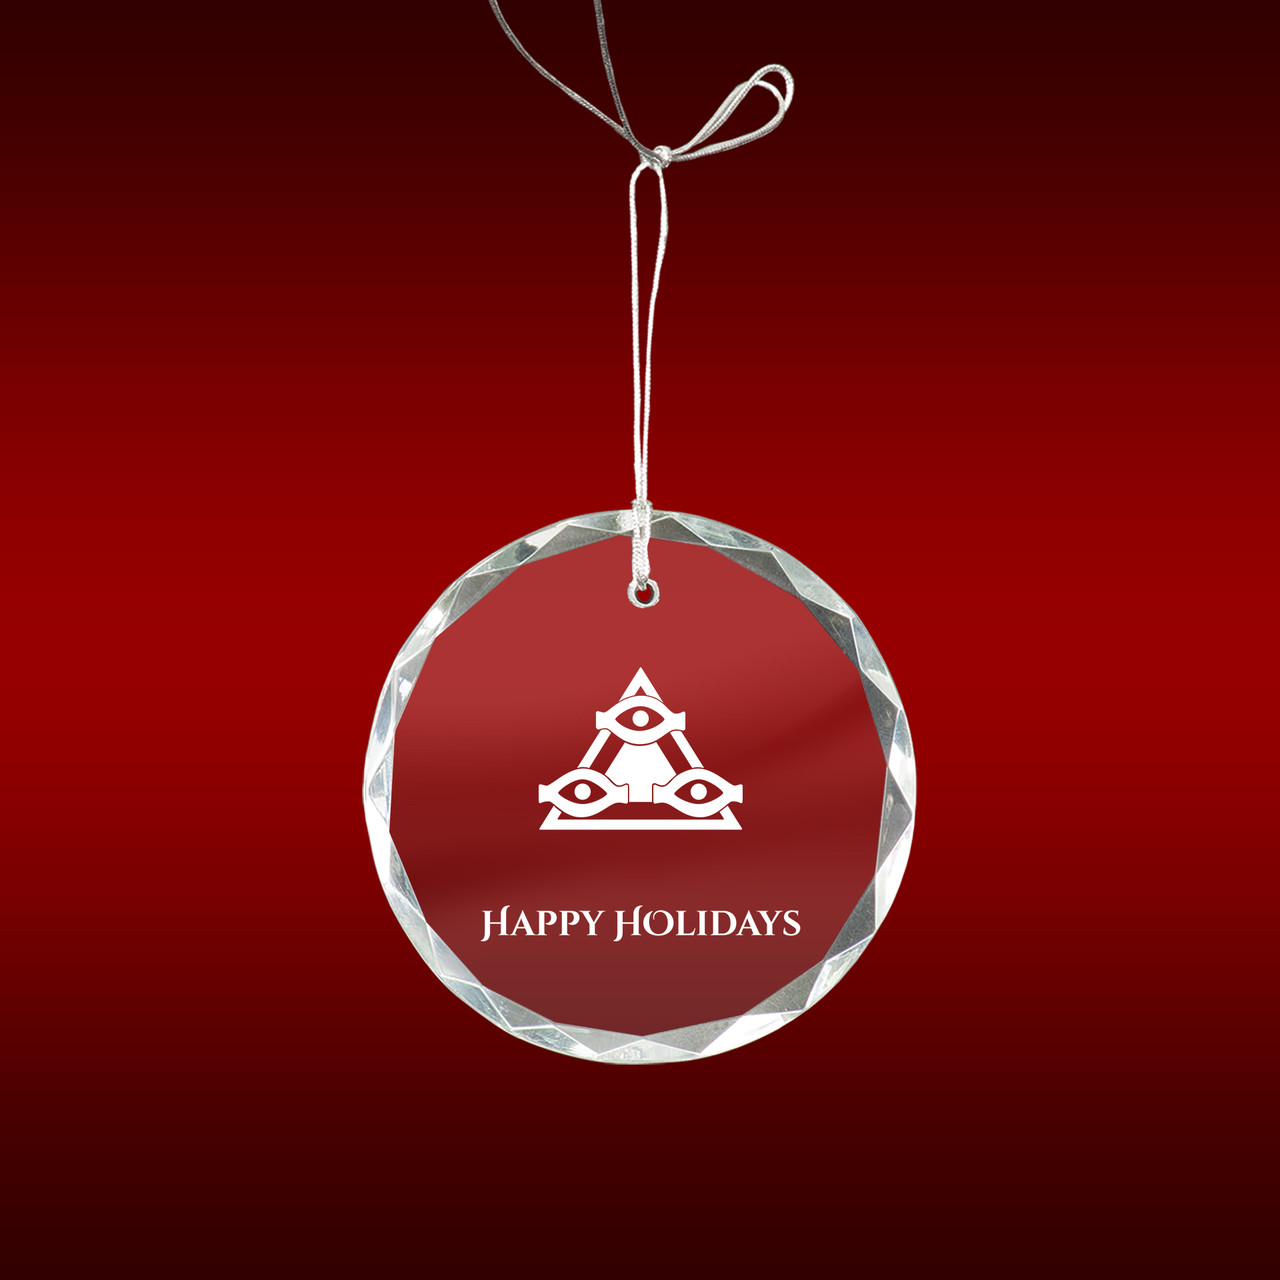 Salubri Holiday Ornament